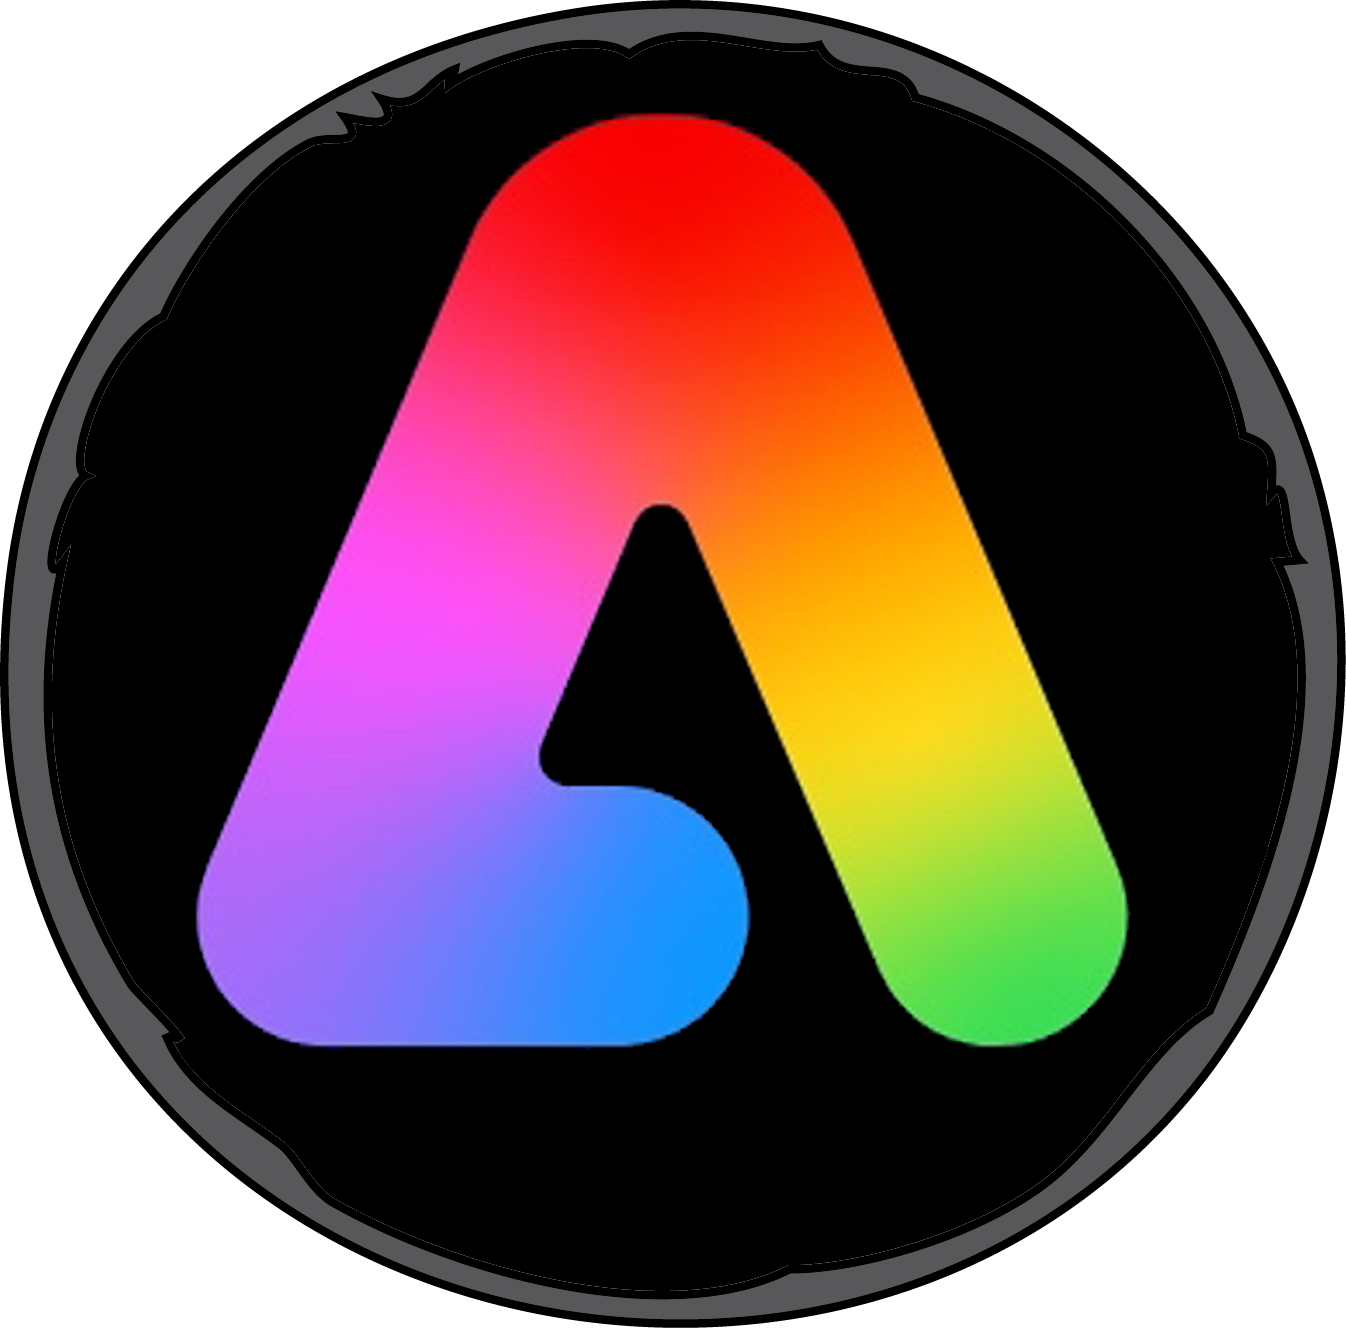 Abode's logo